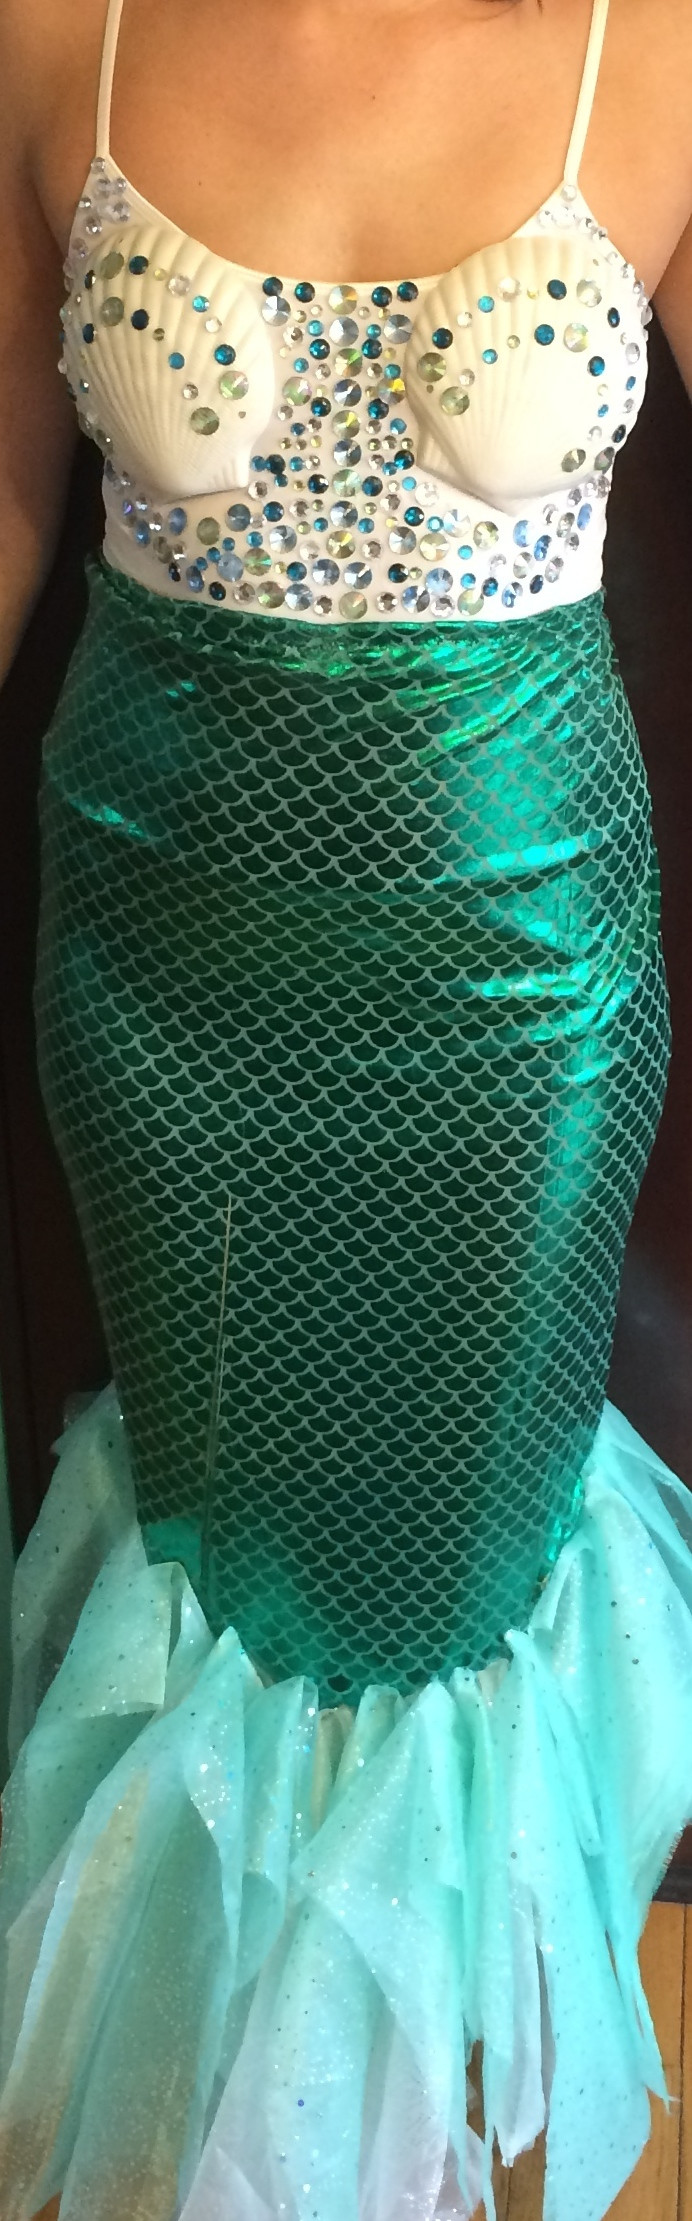 DIY Mermaid Skirt Costume
 DIY Mermaid Costume – wild beautiful and free